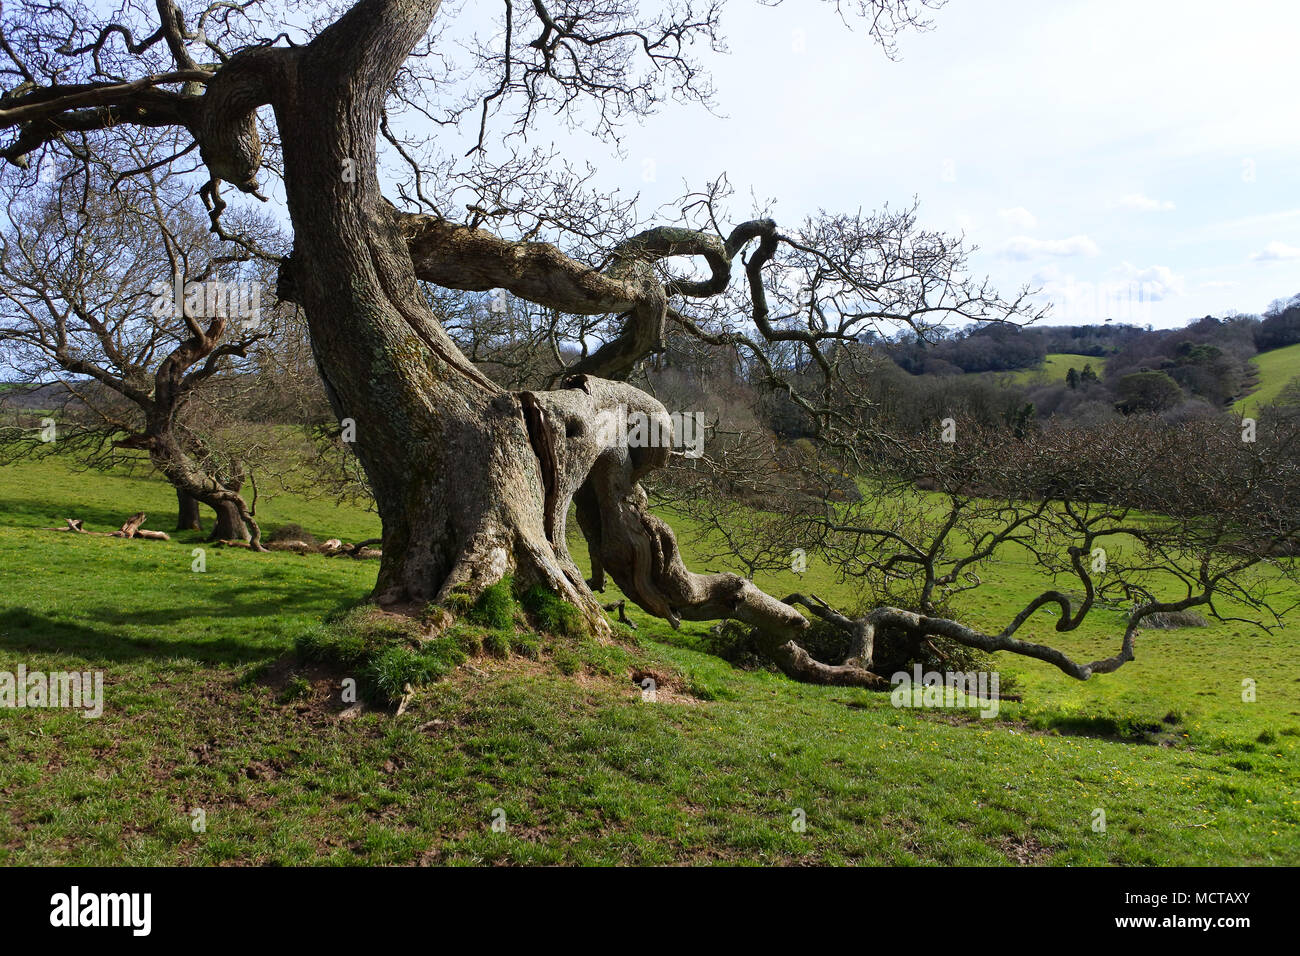 An old, mature oak tree in winter sunshine - John Gollop Stock Photo